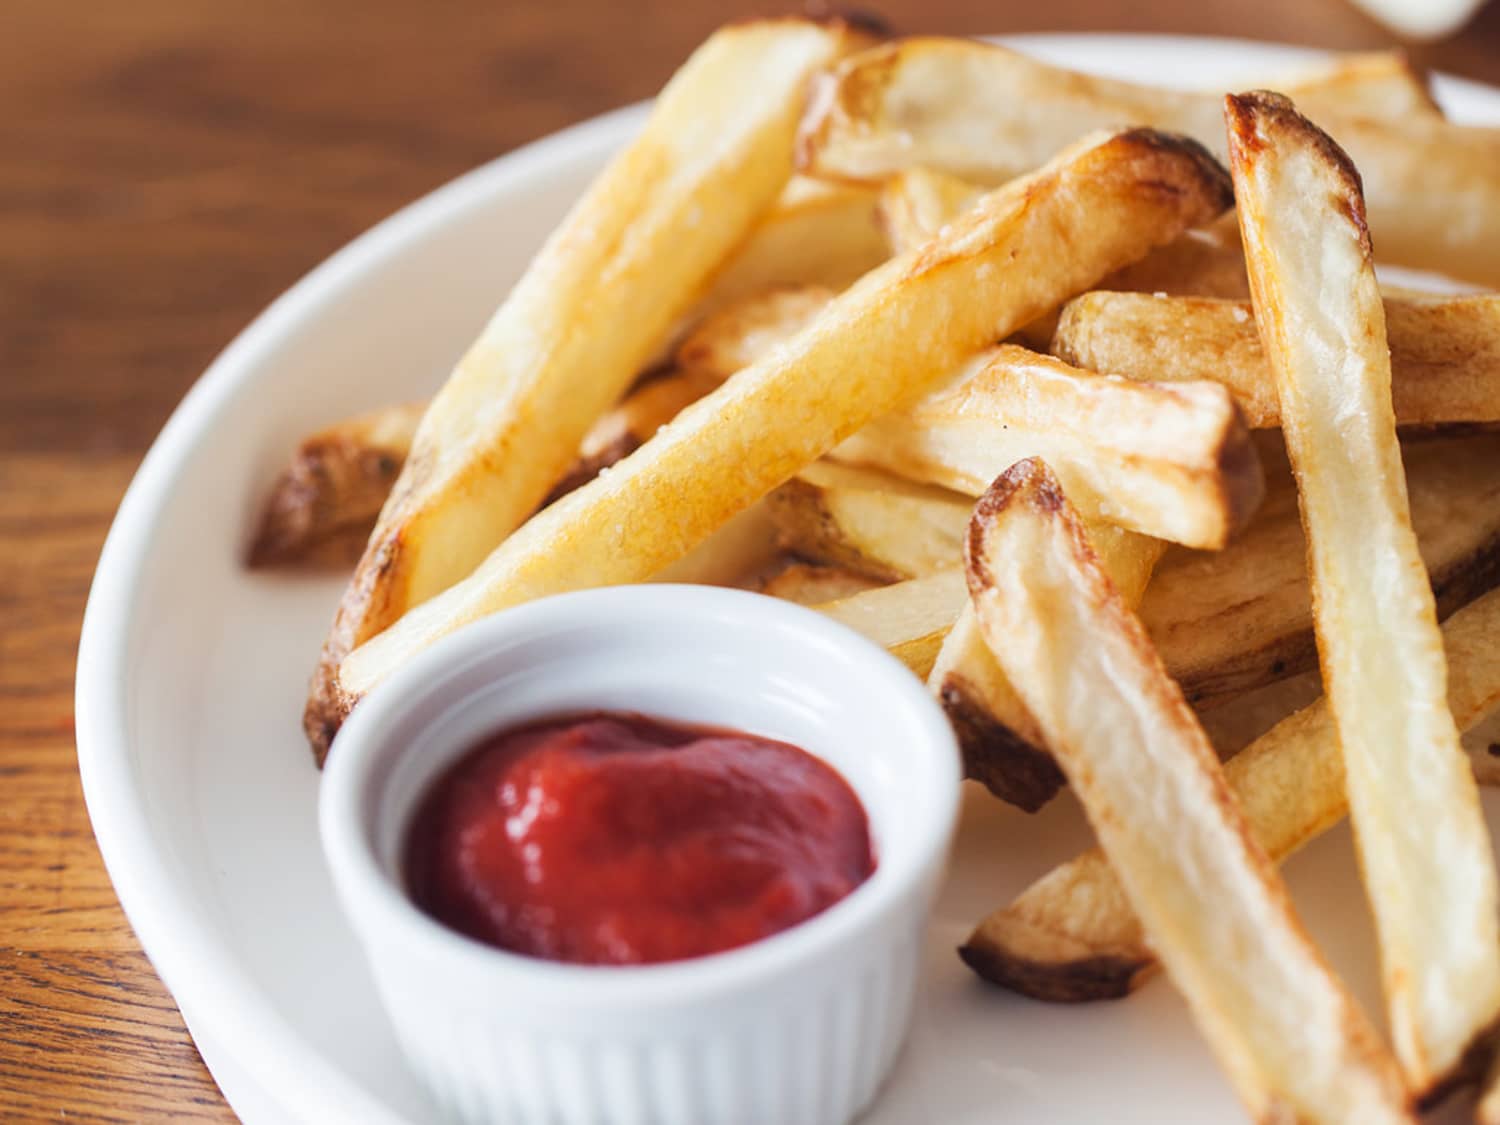 Chefs Share How to Make Frozen French Fries Taste Better